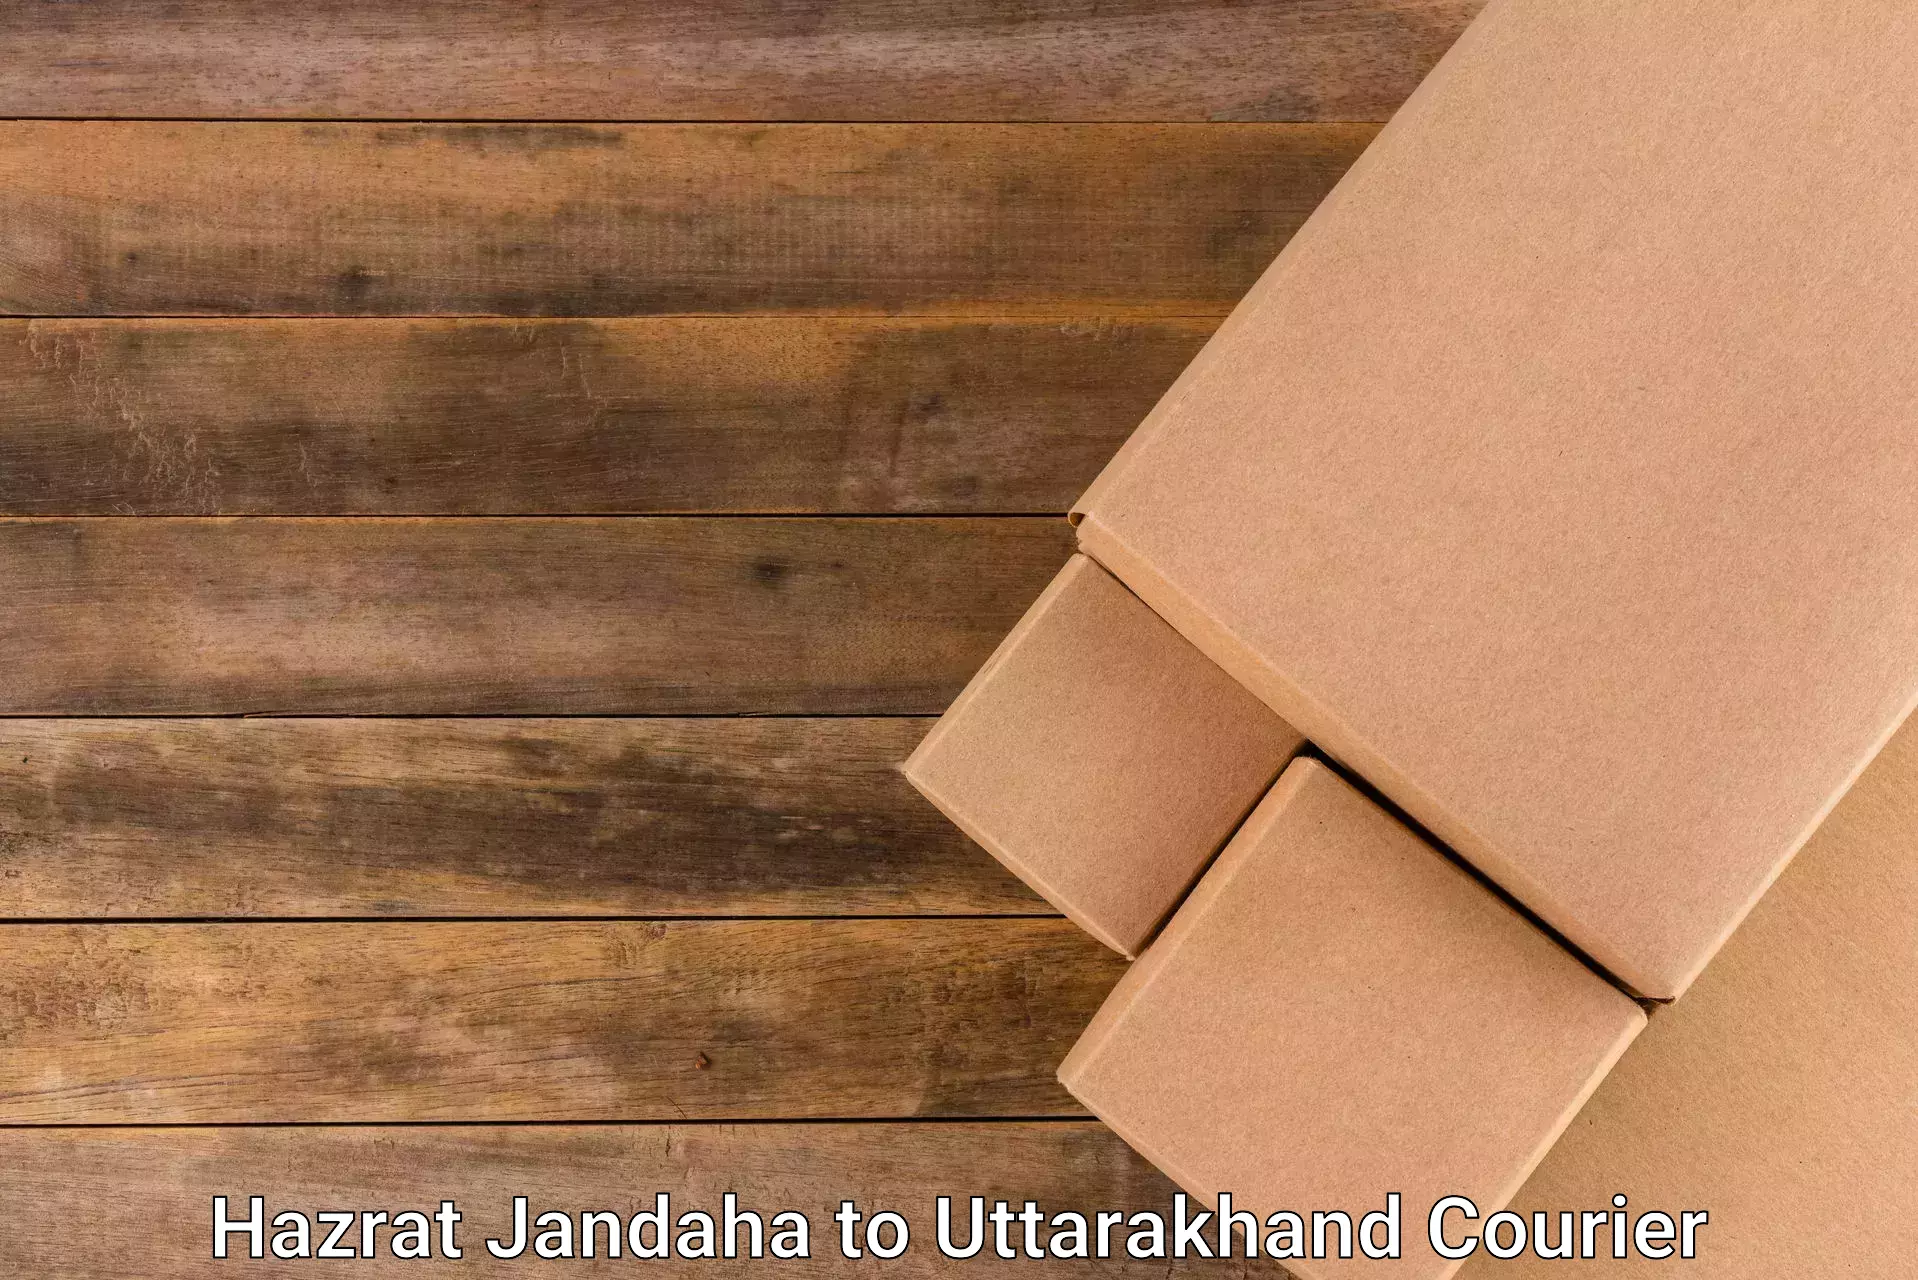 Modern courier technology Hazrat Jandaha to Uttarakhand